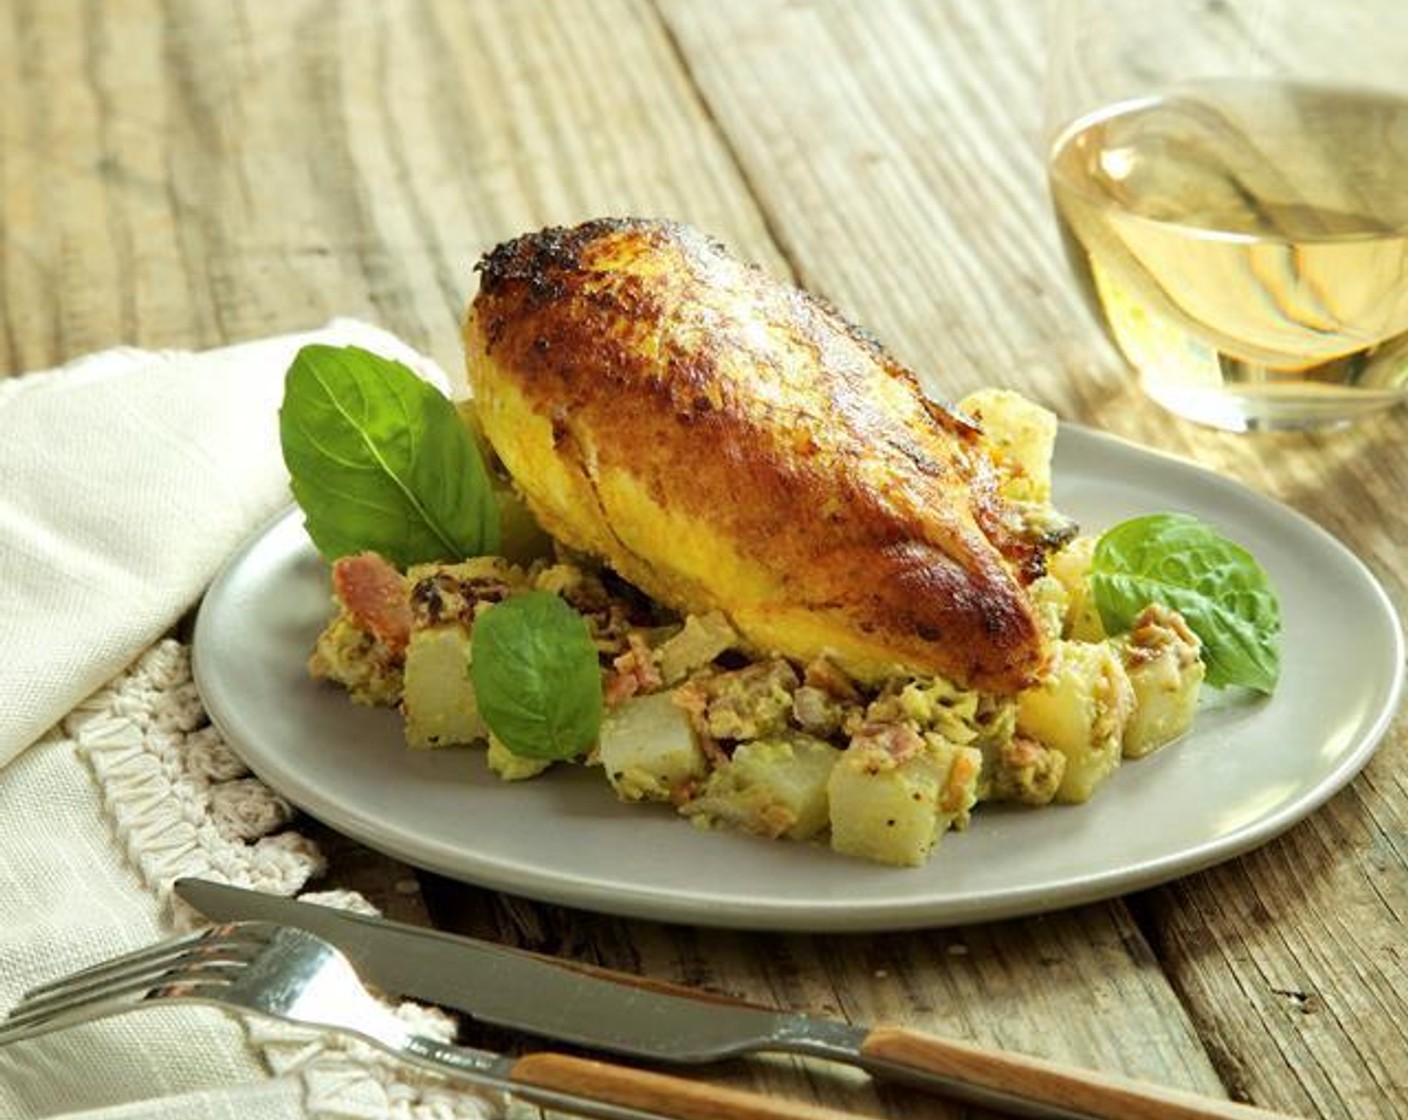 Skillet Rosemary Chicken with No-Tato Salad